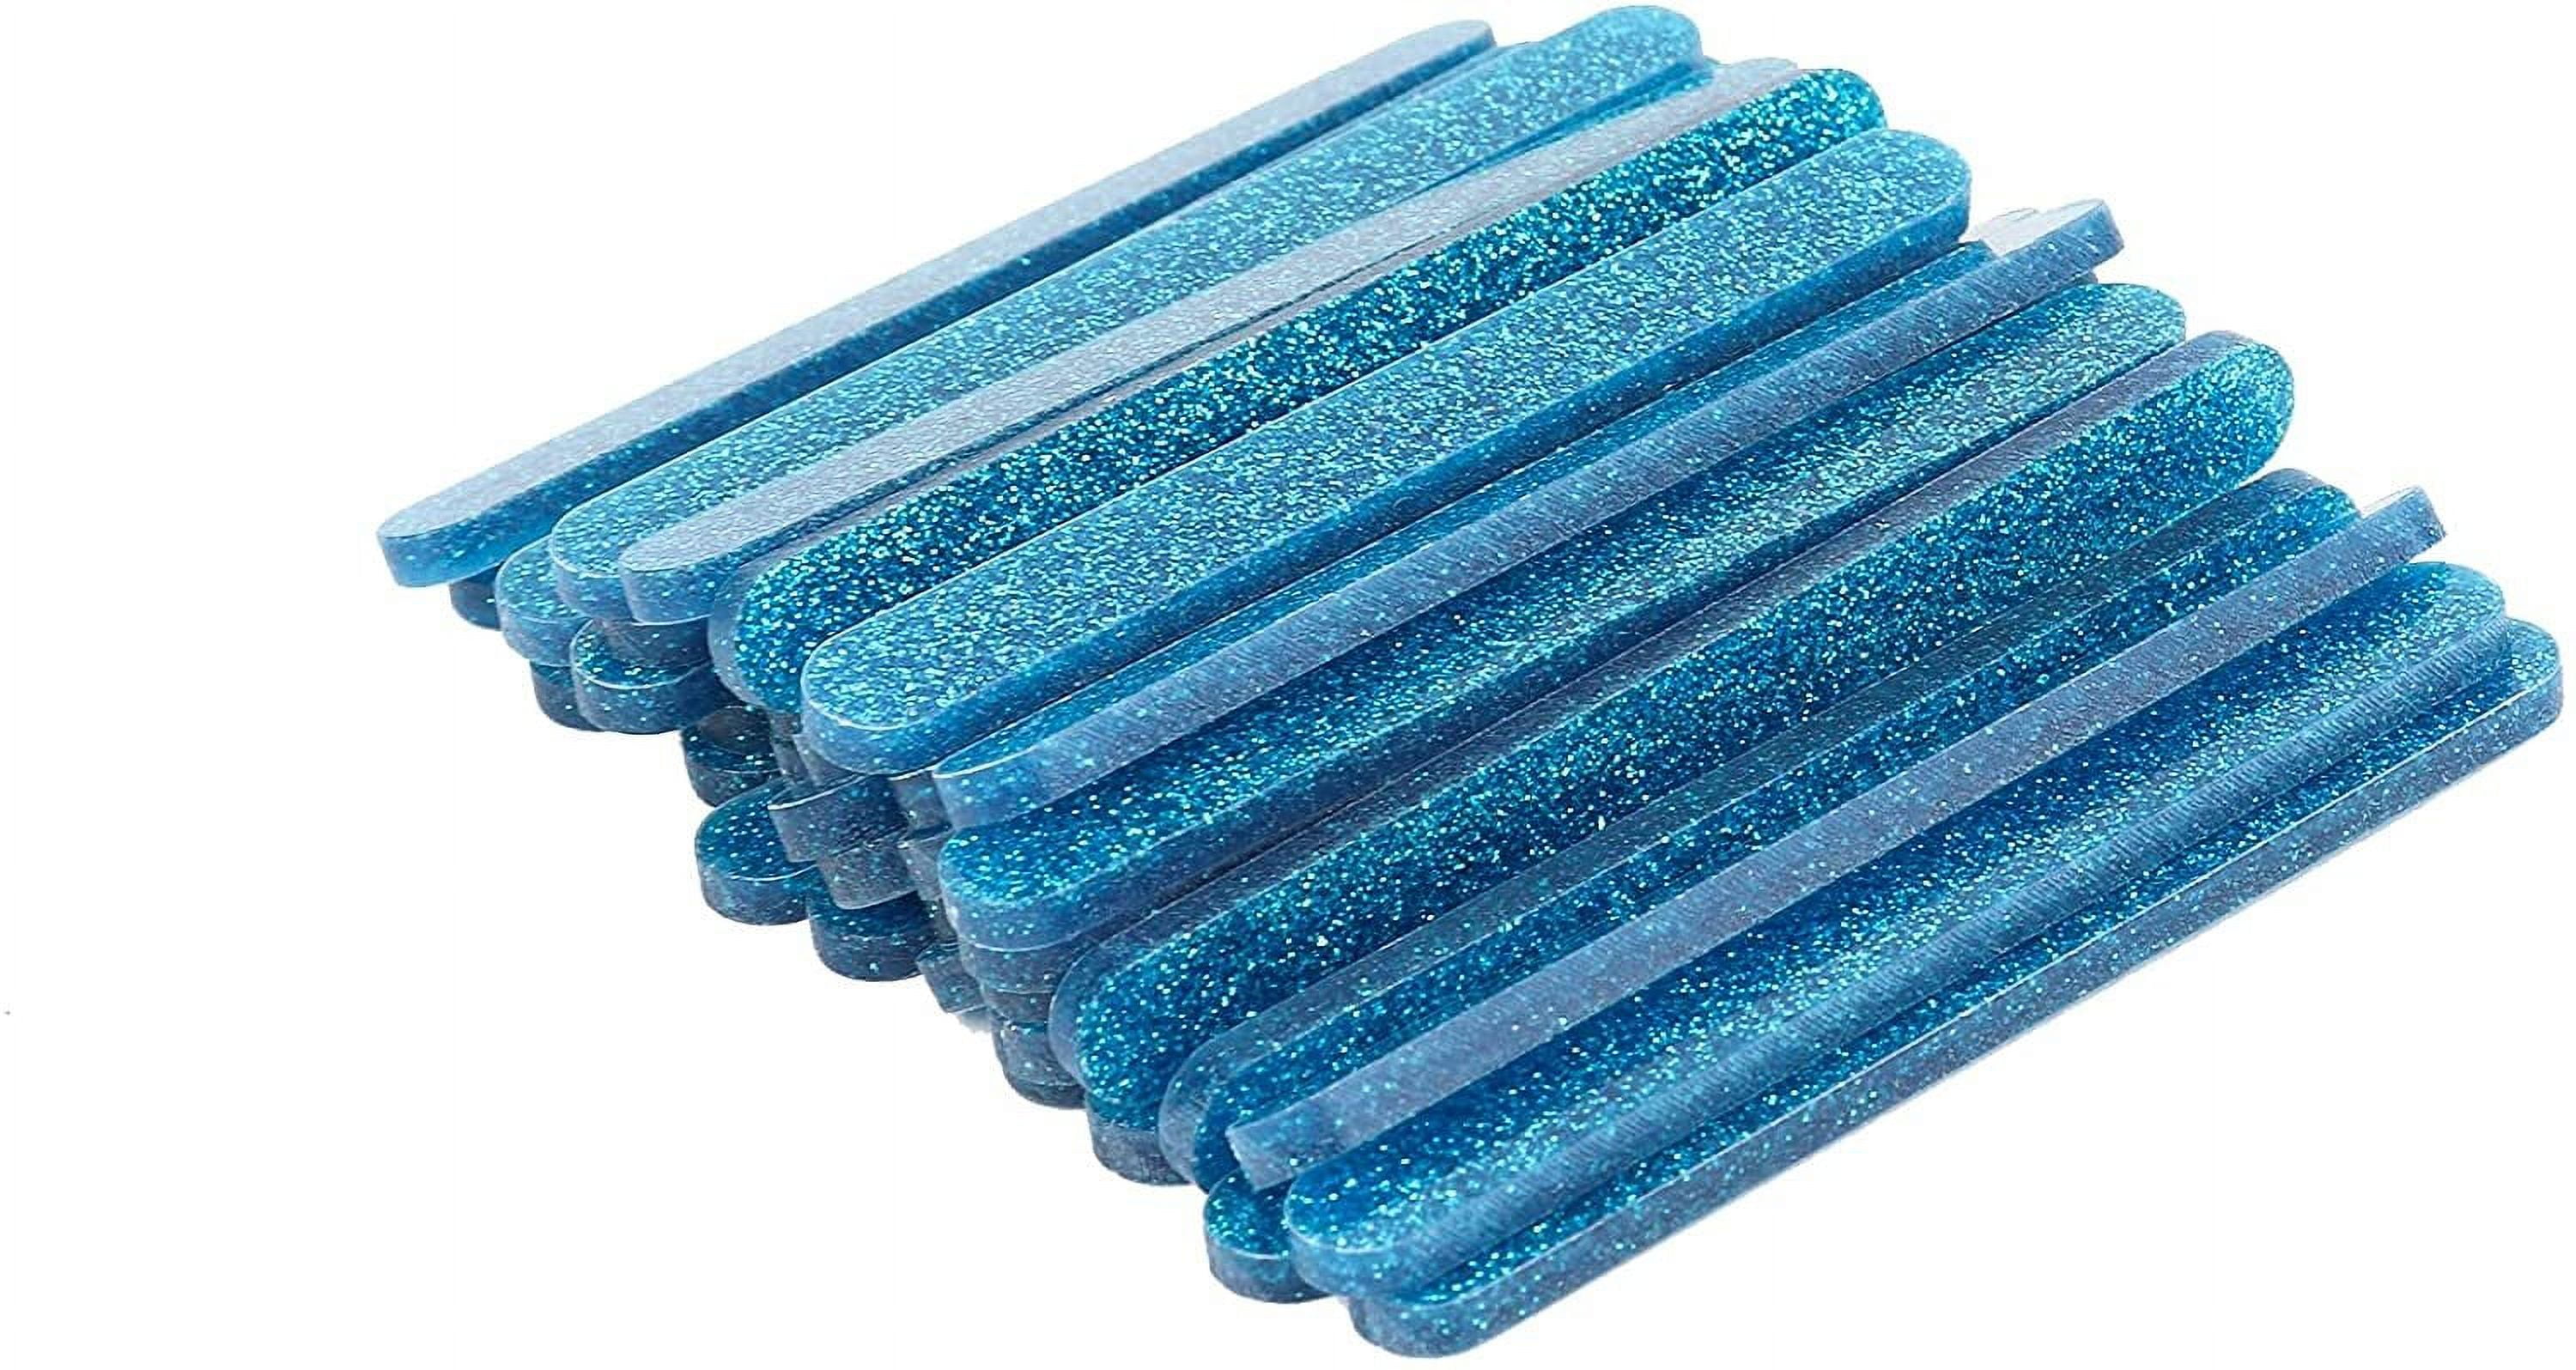 Shop Acrylic Popsicle Sticks: Glitter Black Cakesicle Sticks 12 CT –  Sprinkle Bee Sweet